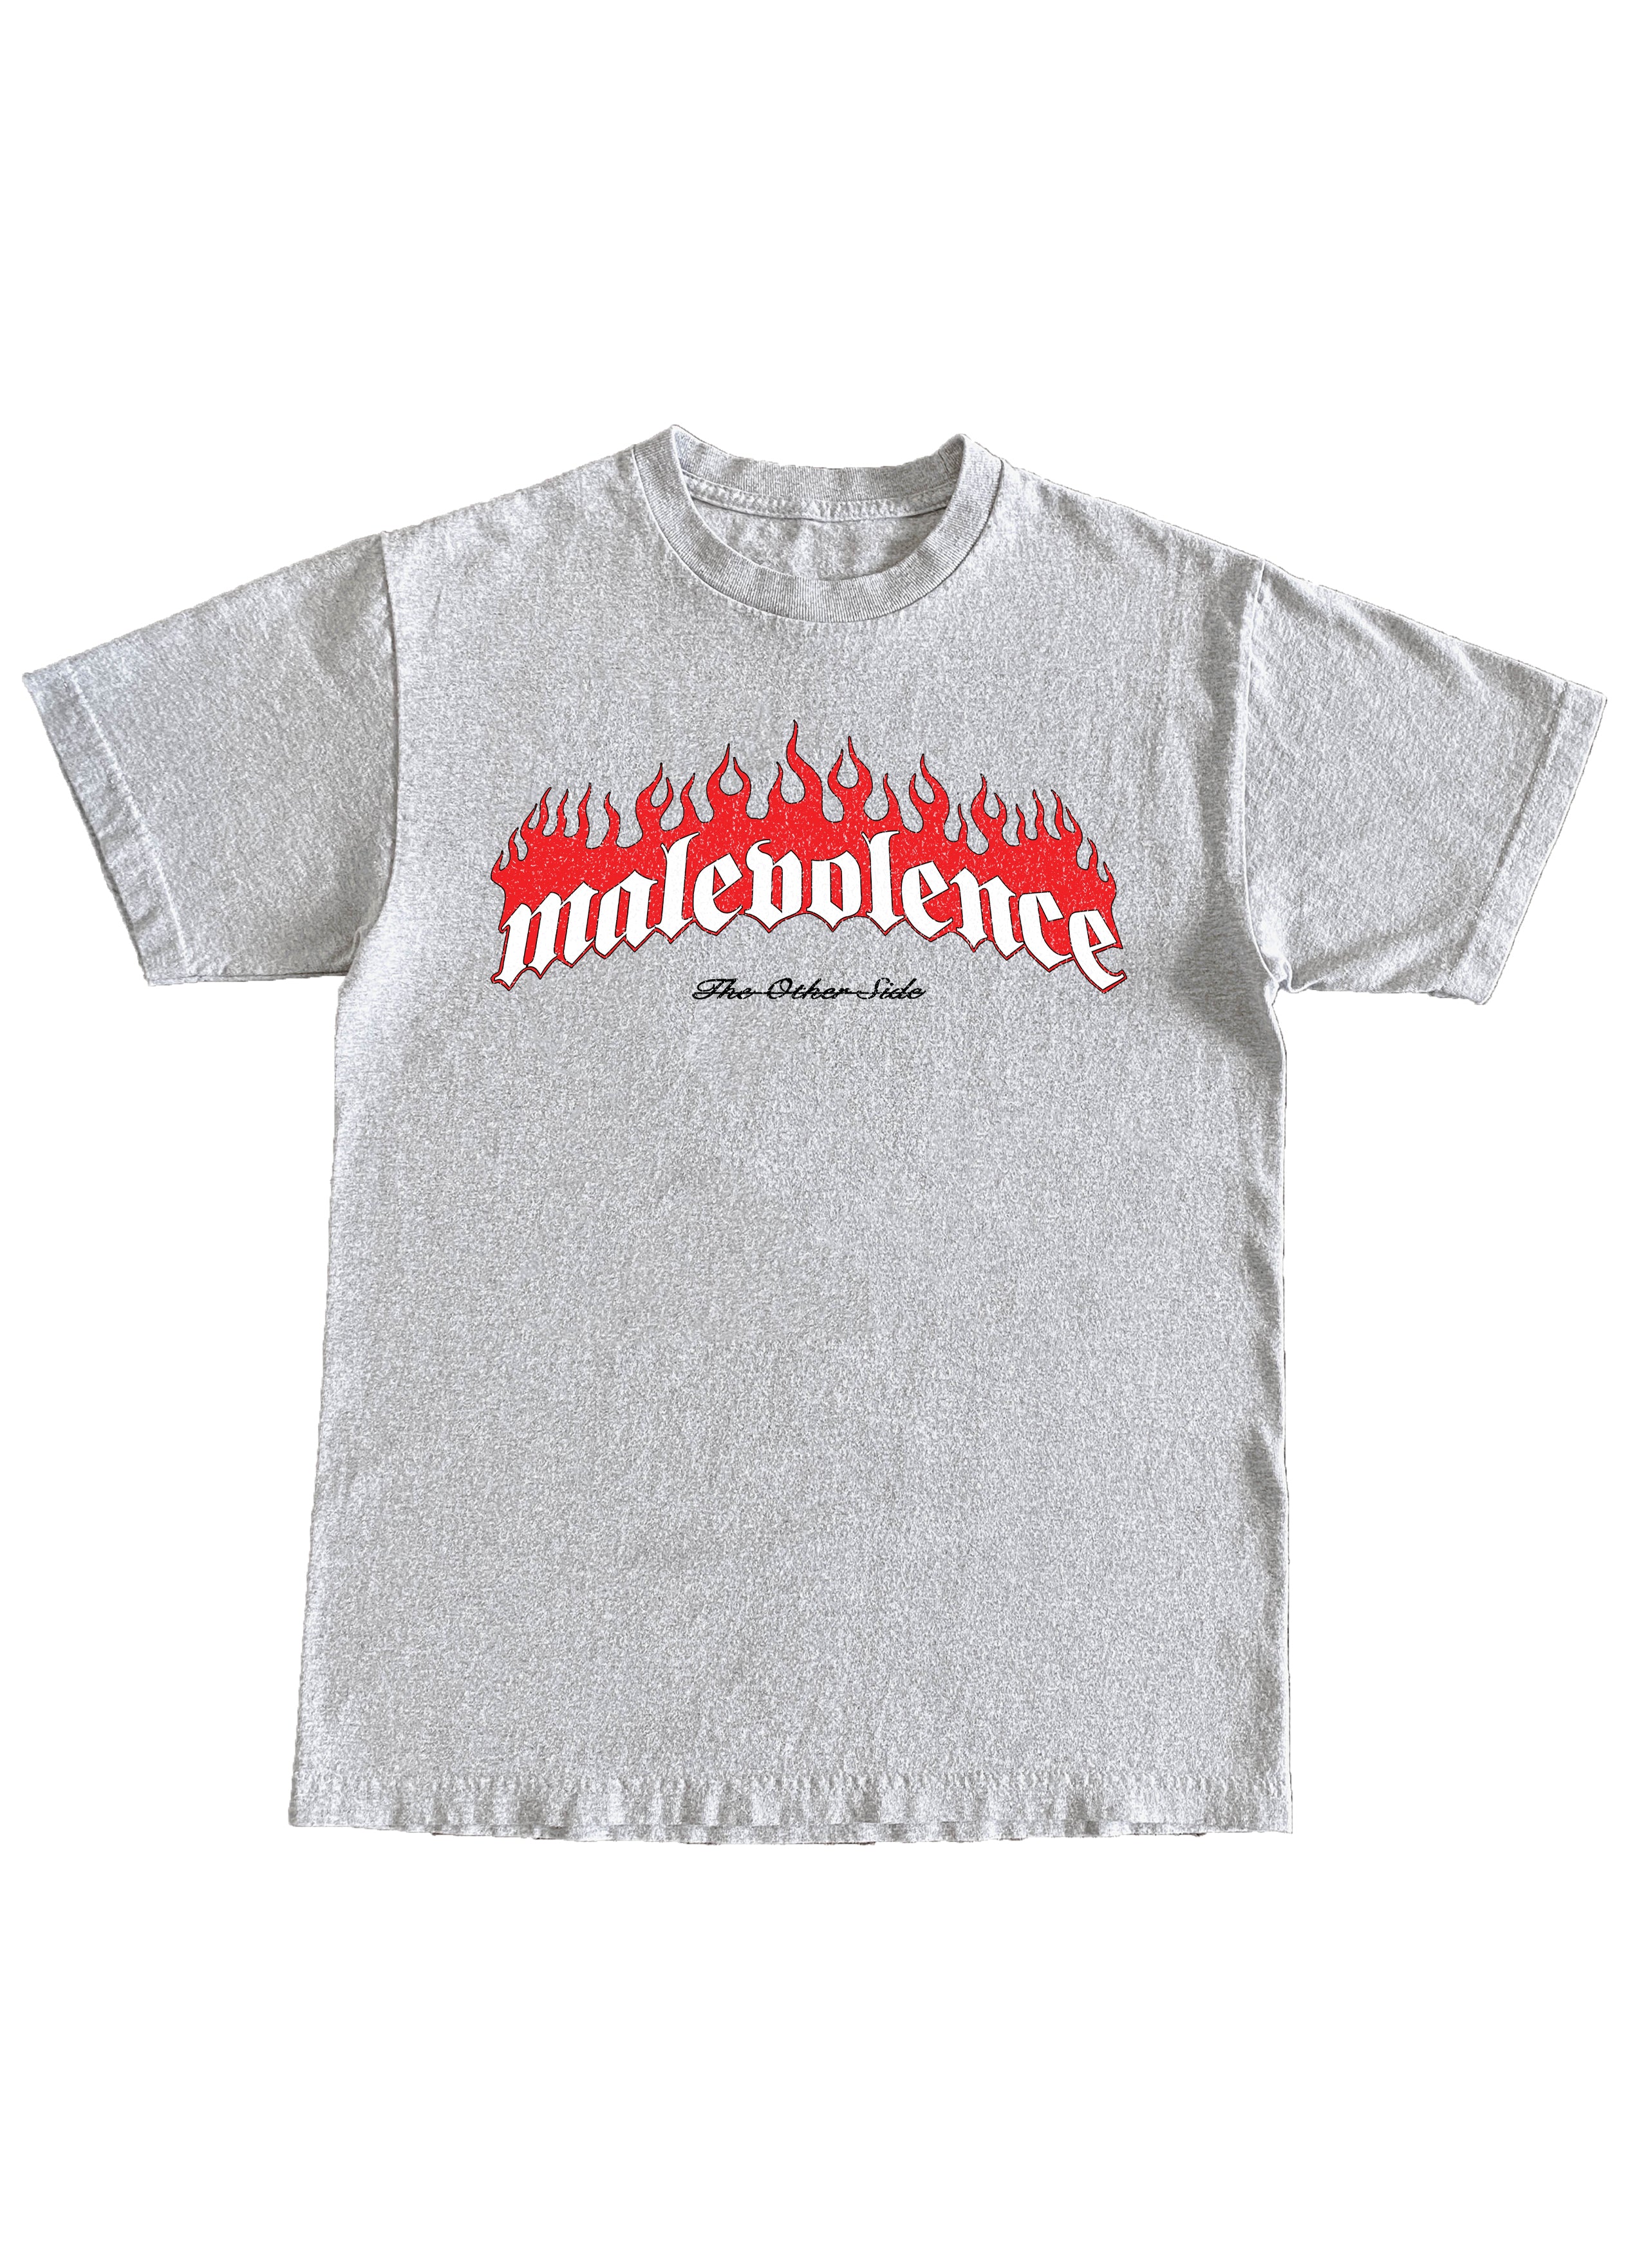 MalevBreed T-Shirt